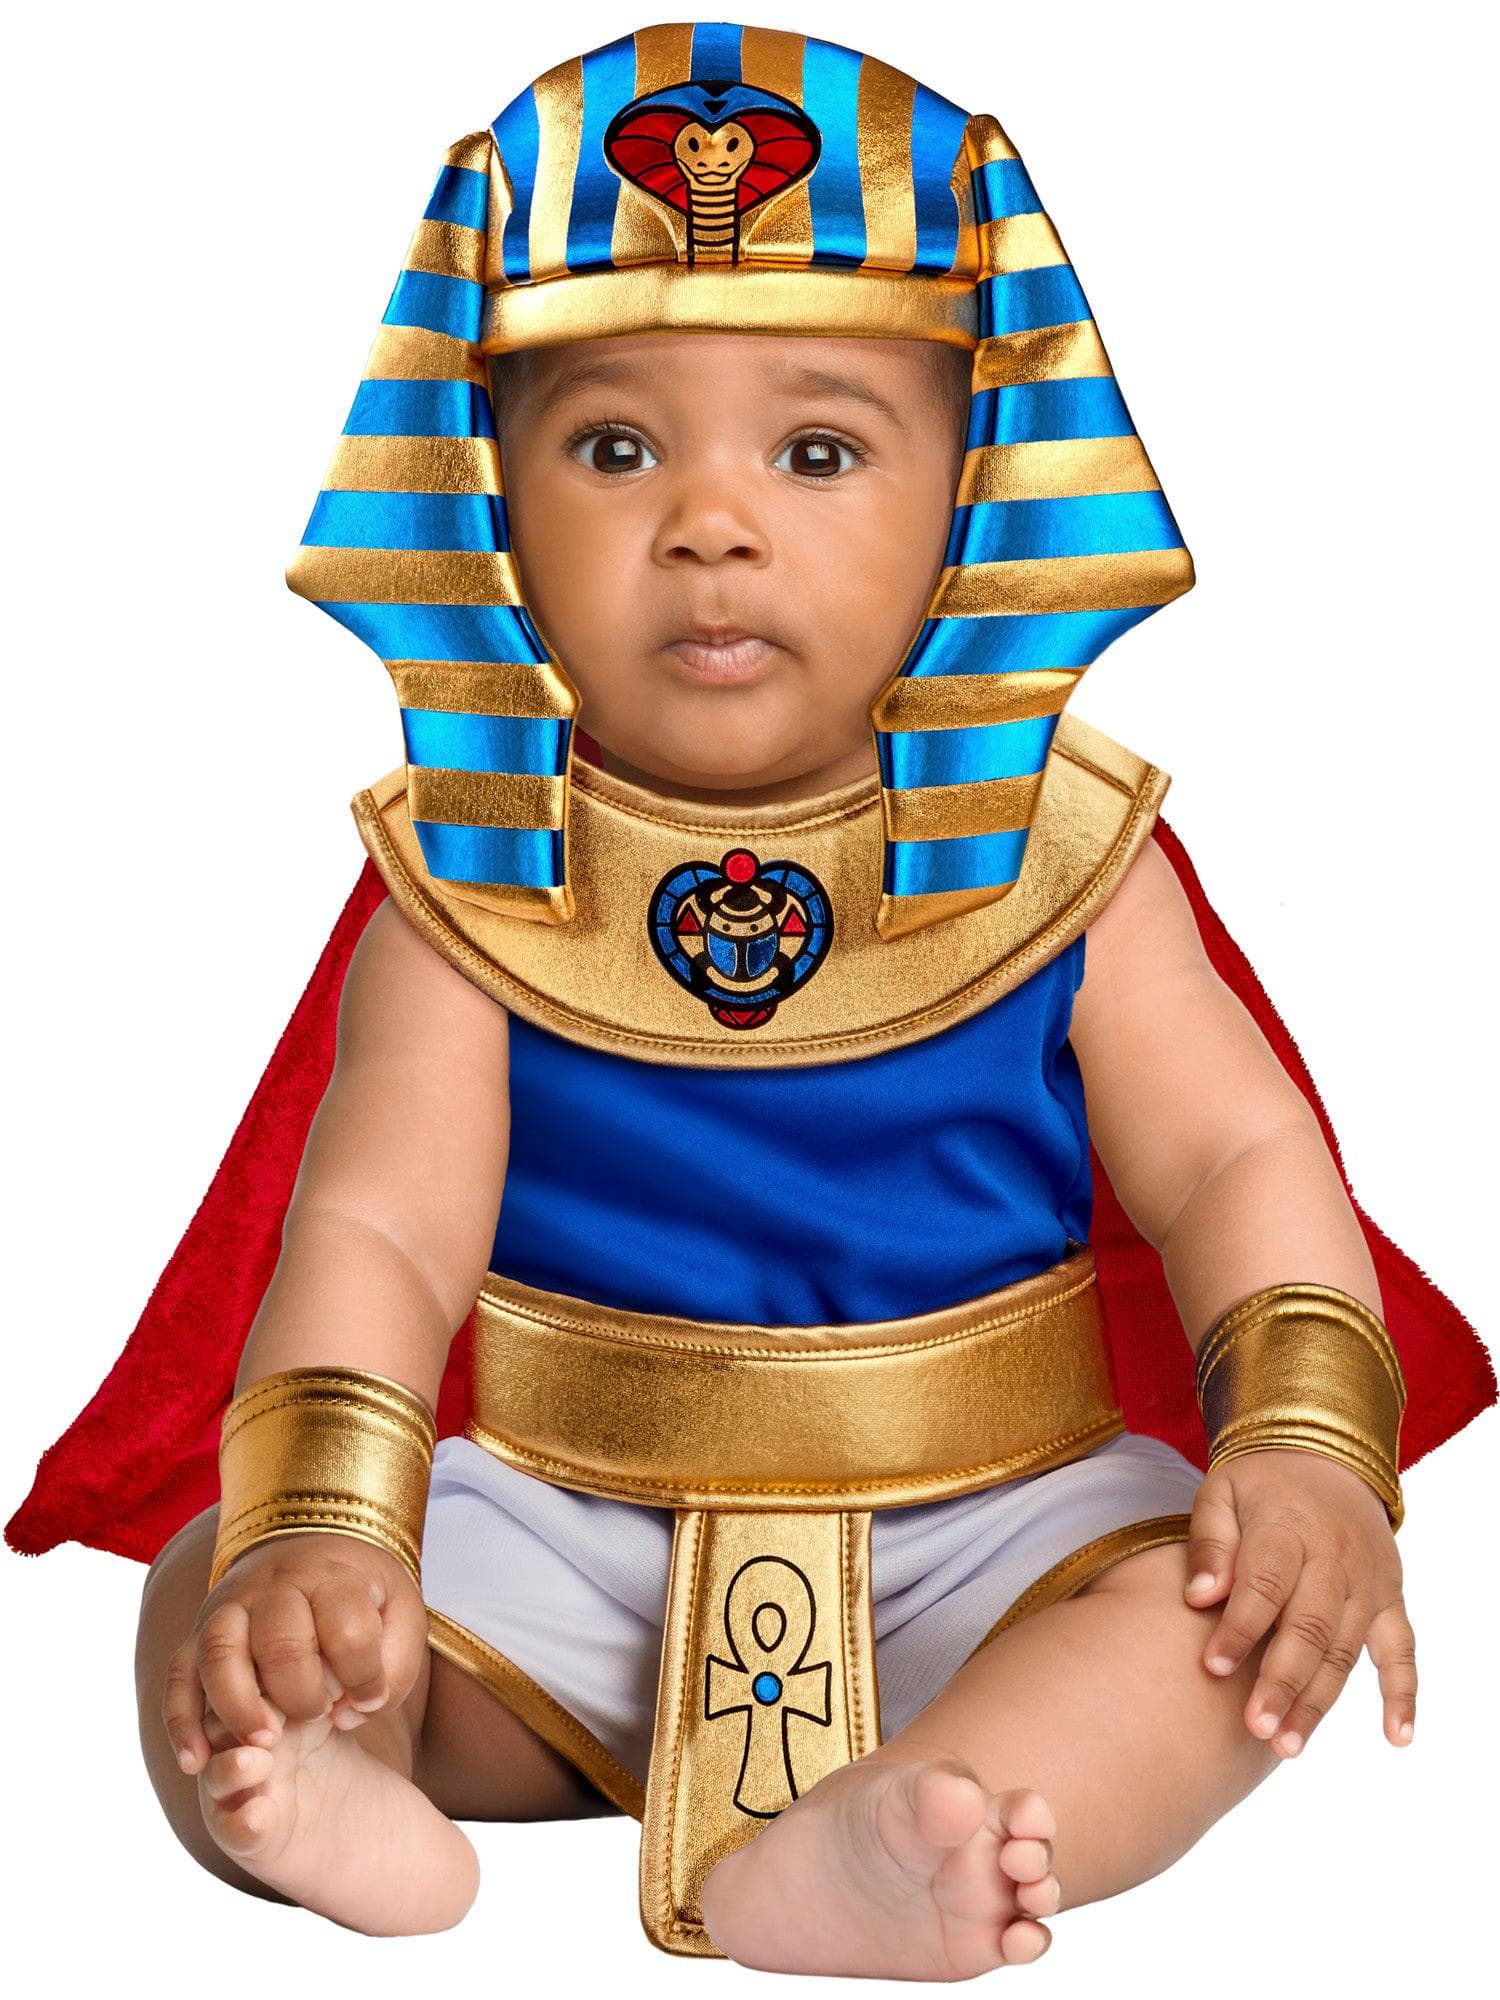 King Tut Costume for Babies - costumes.com